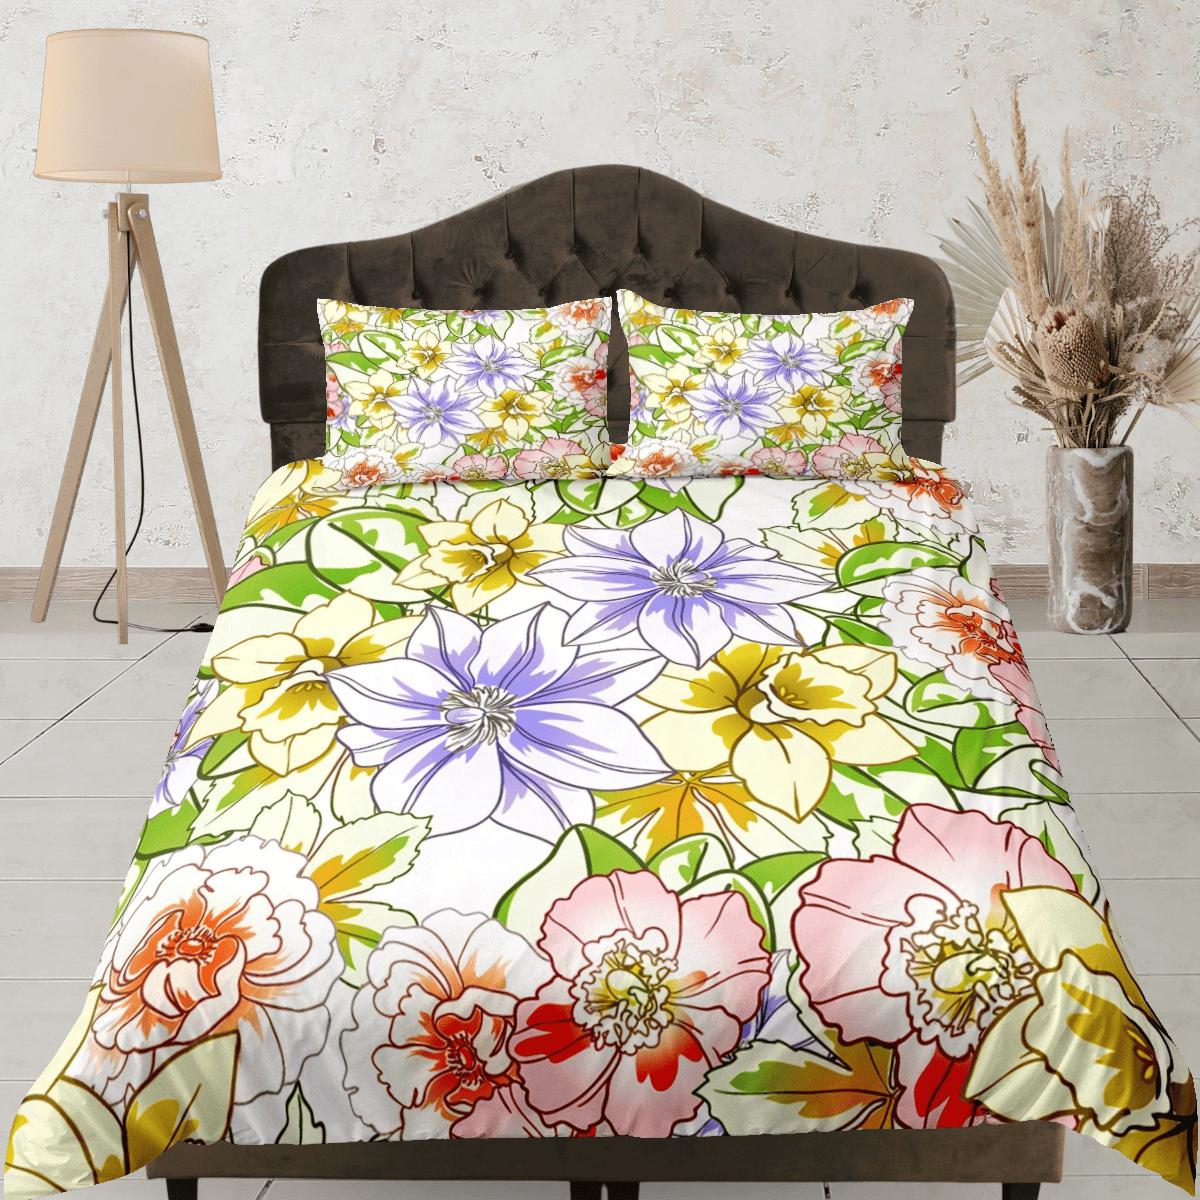 daintyduvet Yellow summer floral duvet cover colorful bedding, teen girl bedroom, baby girl crib bedding boho maximalist bedspread aesthetic bedding